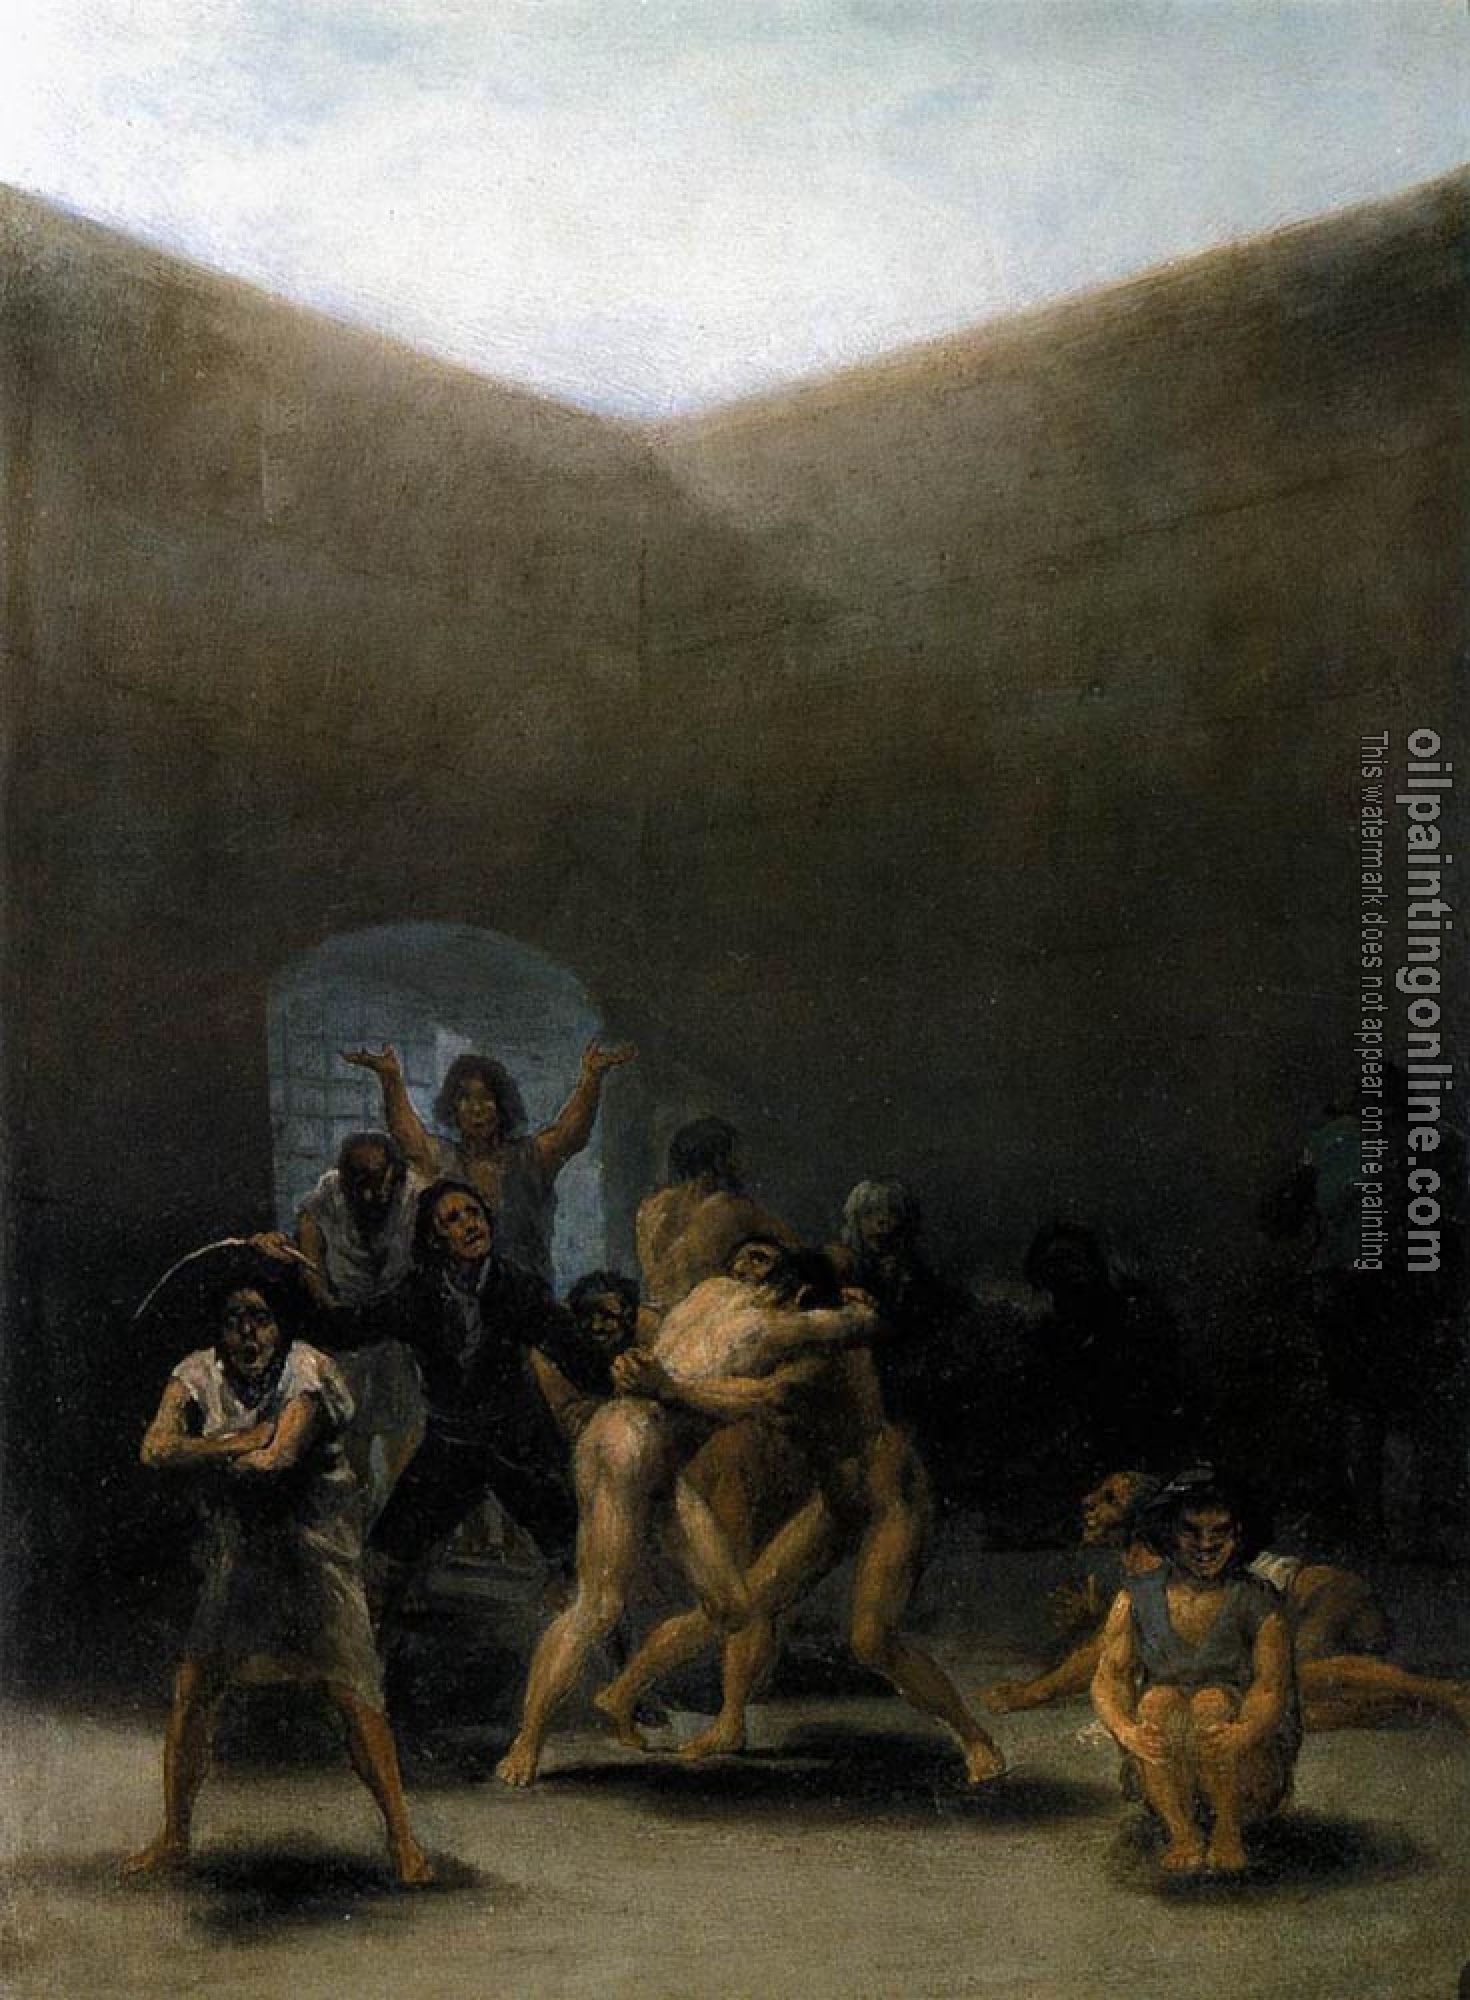 Goya, Francisco de - The Yard of a Madhouse